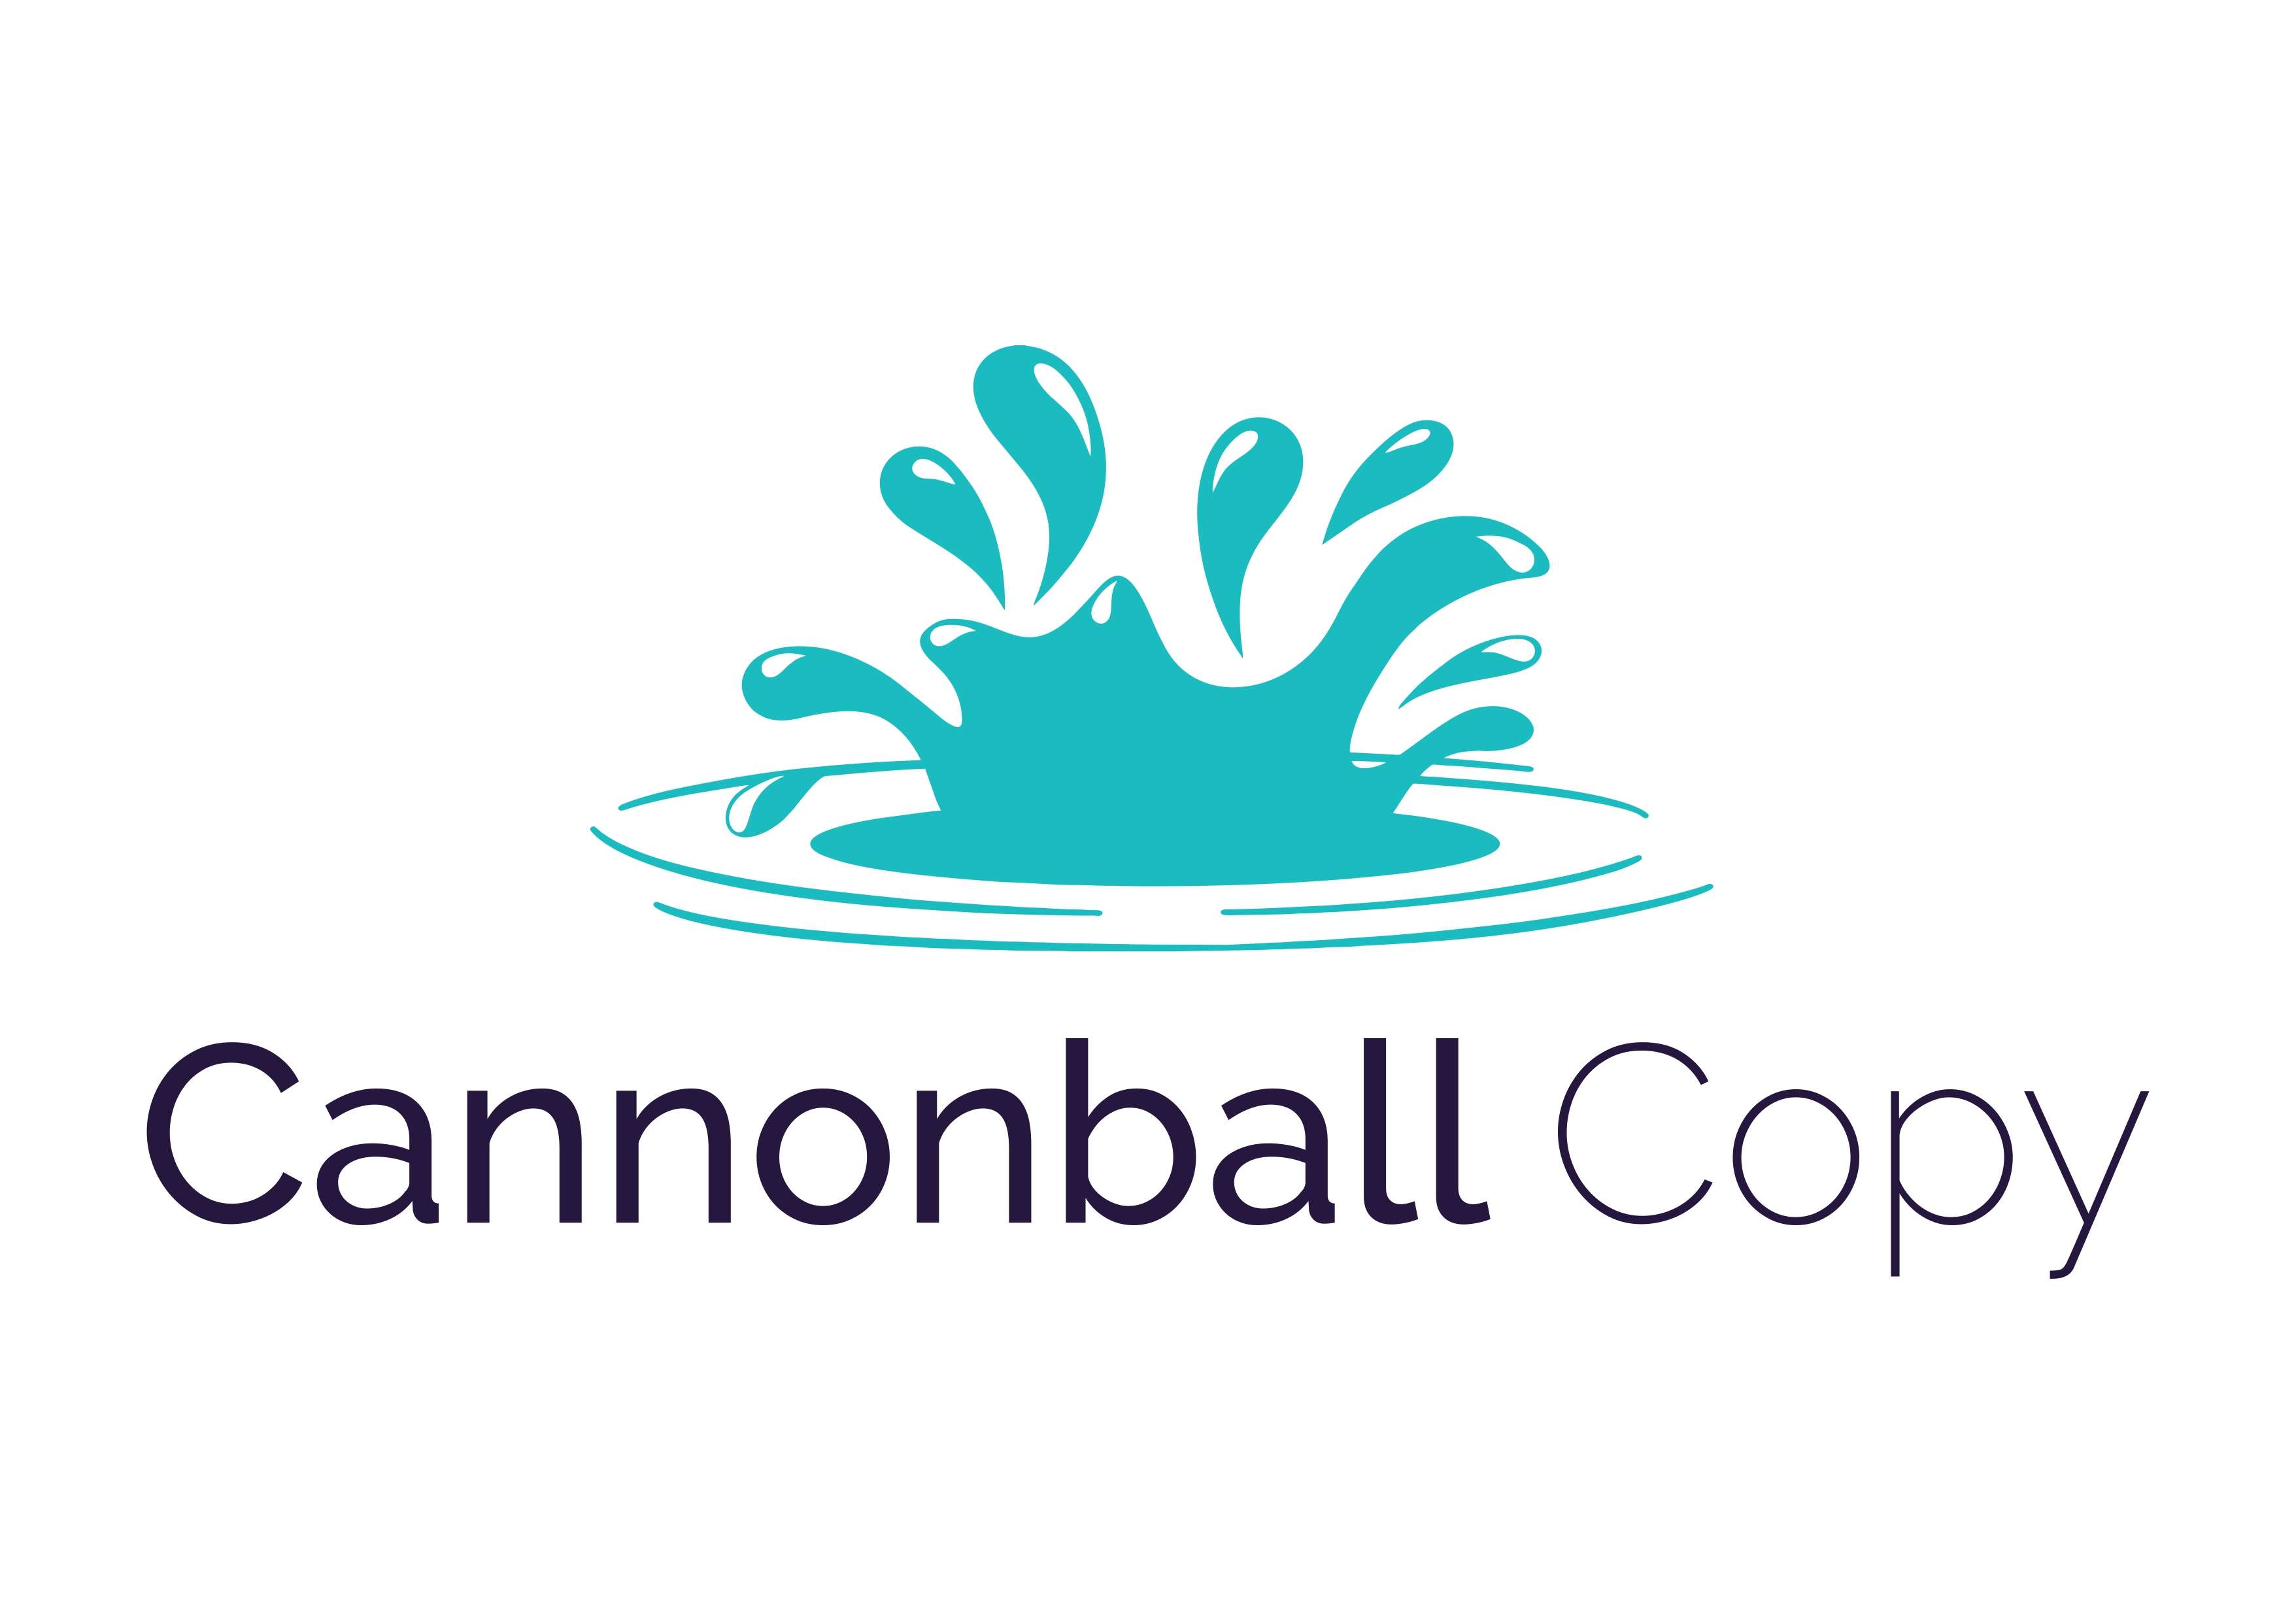 Cannonball Copy